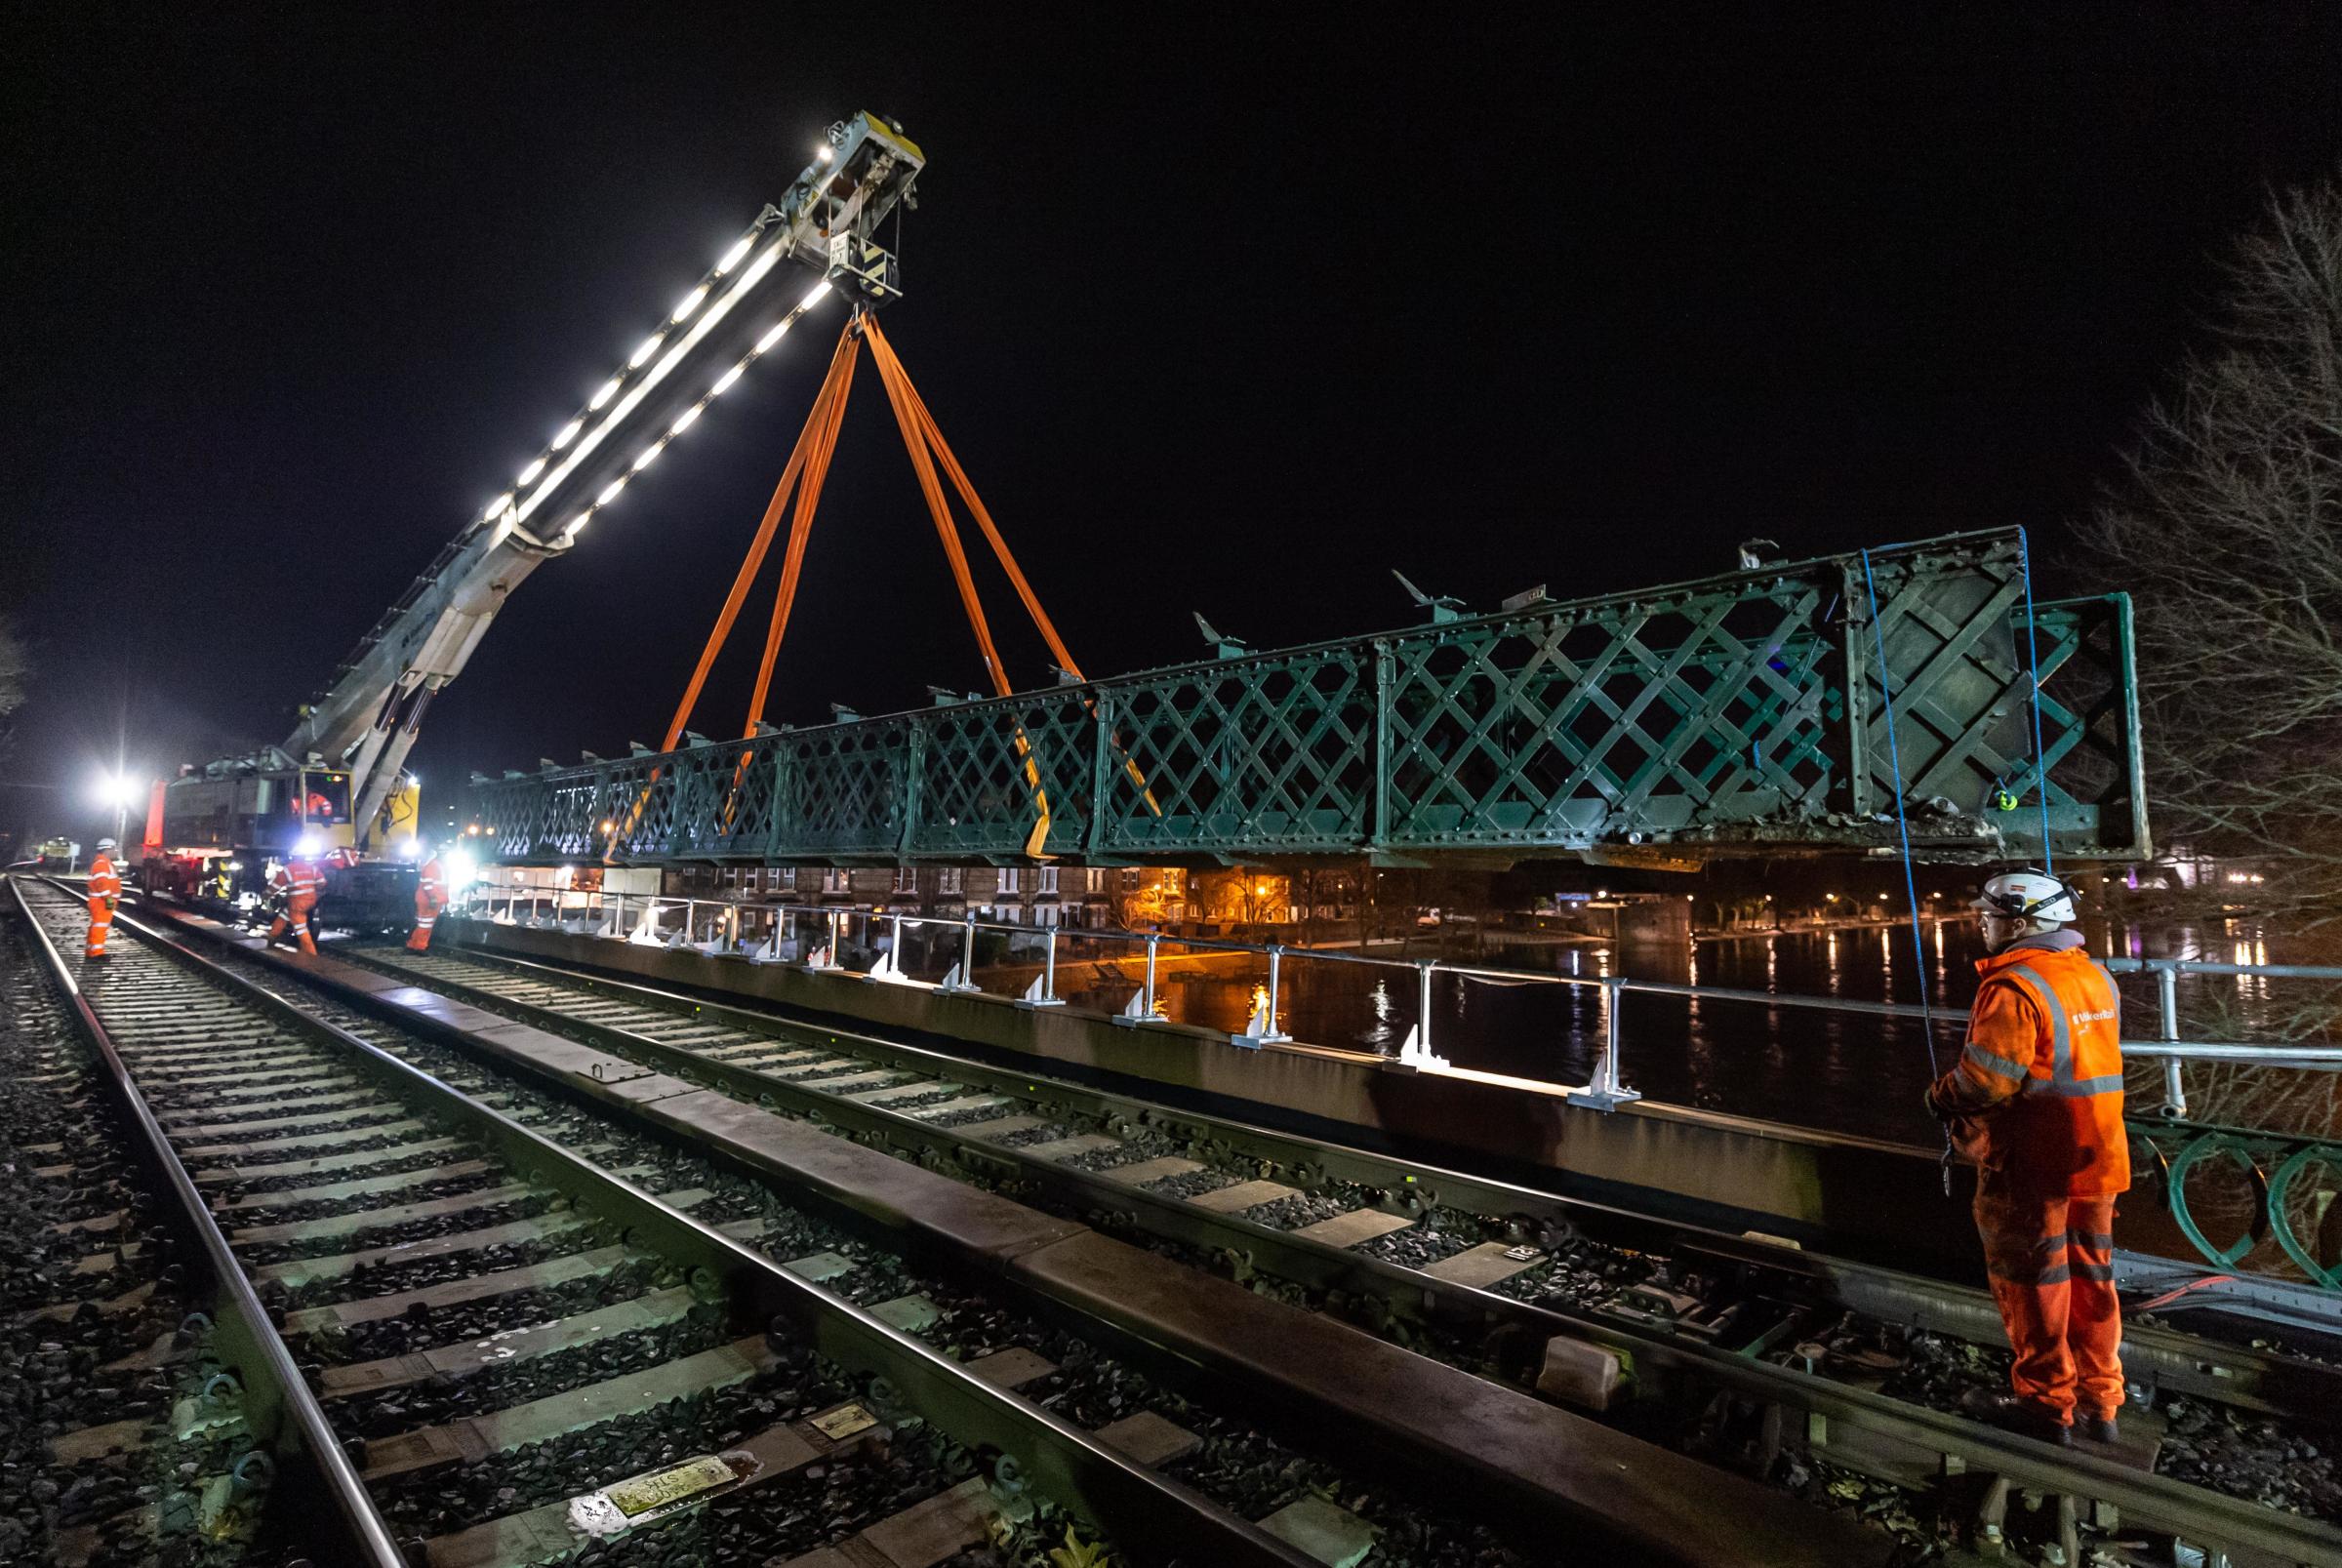 Pictures reveal scale of crane operation to remove York footbridge